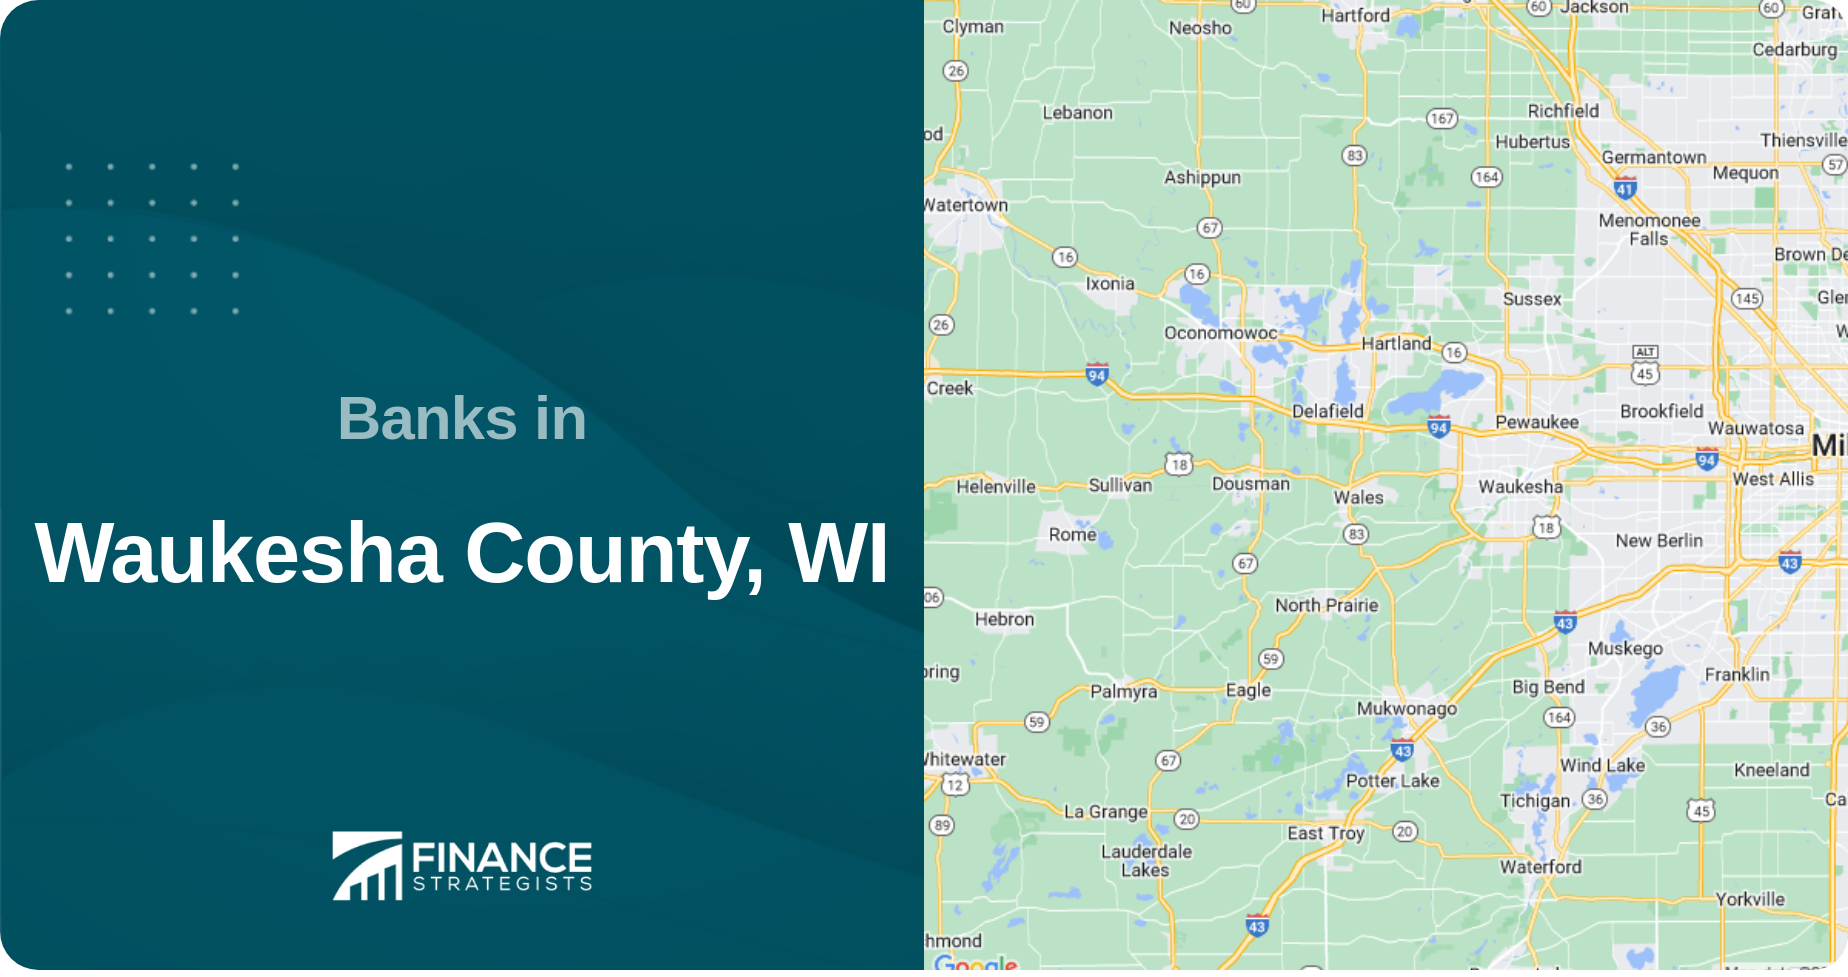 Banks in Waukesha County, WI